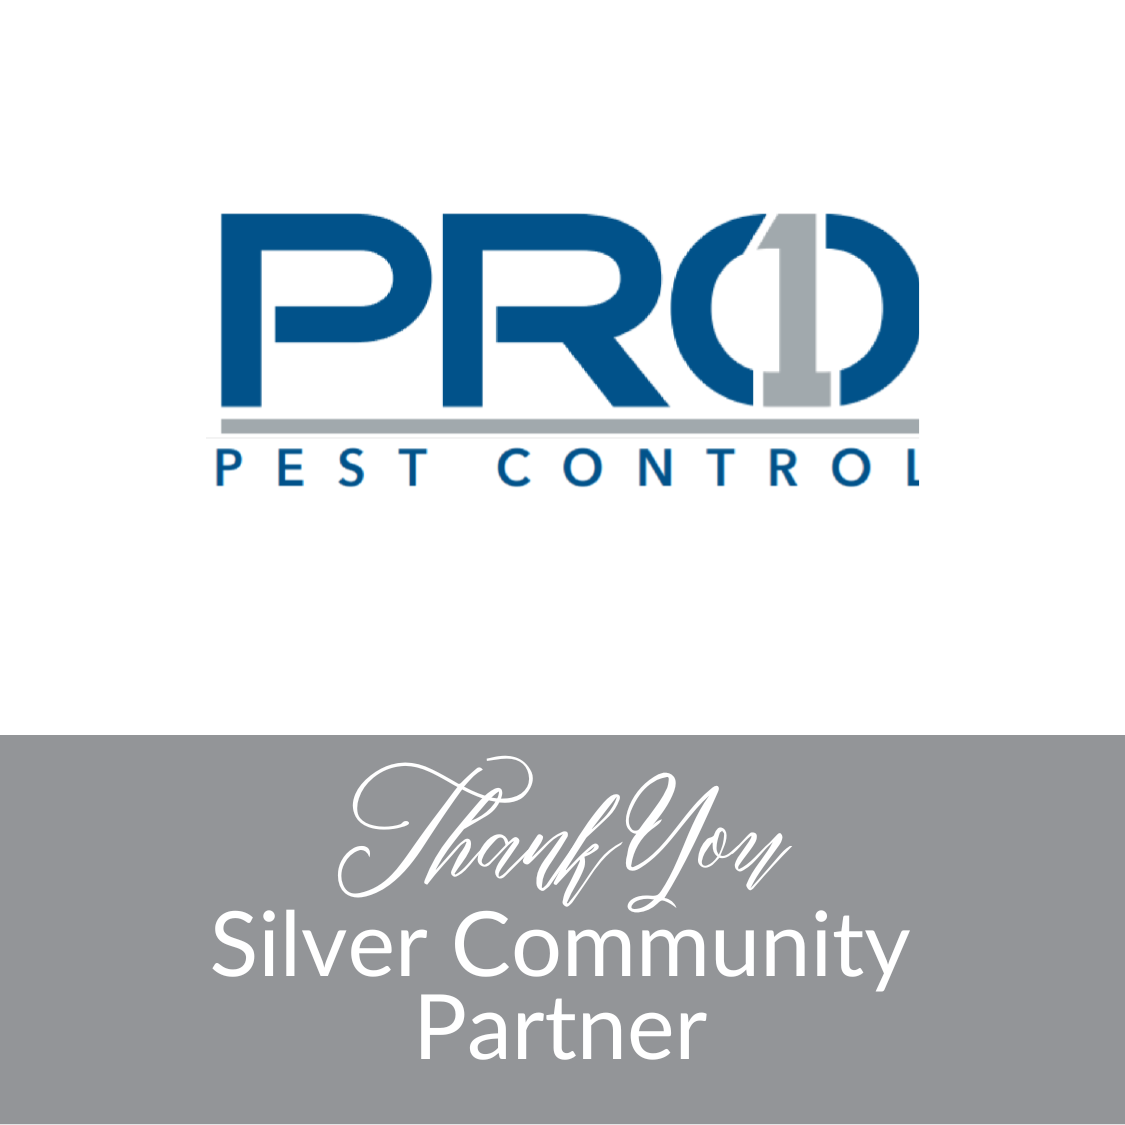 Pro 1 Pest Control